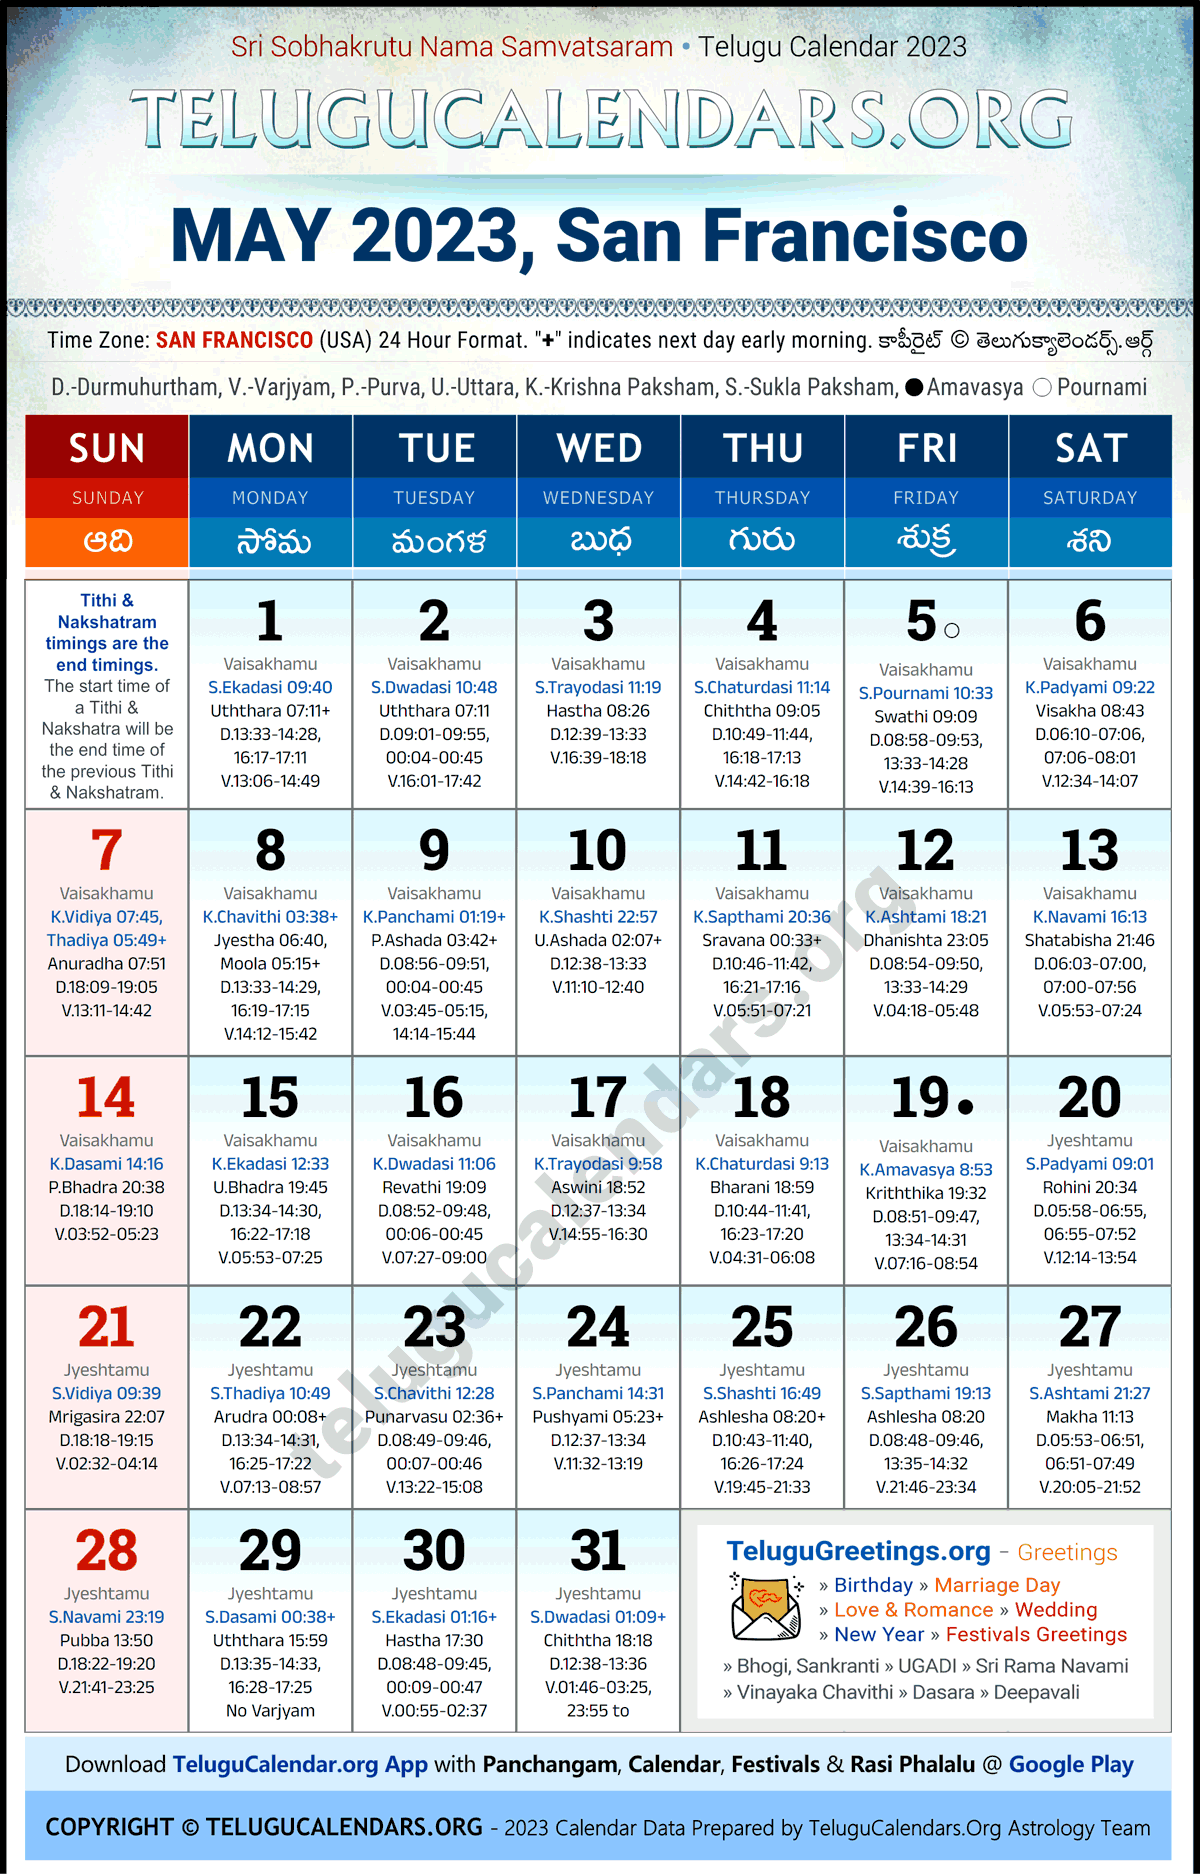 Telugu Calendar 2023 May Festivals for San Francisco